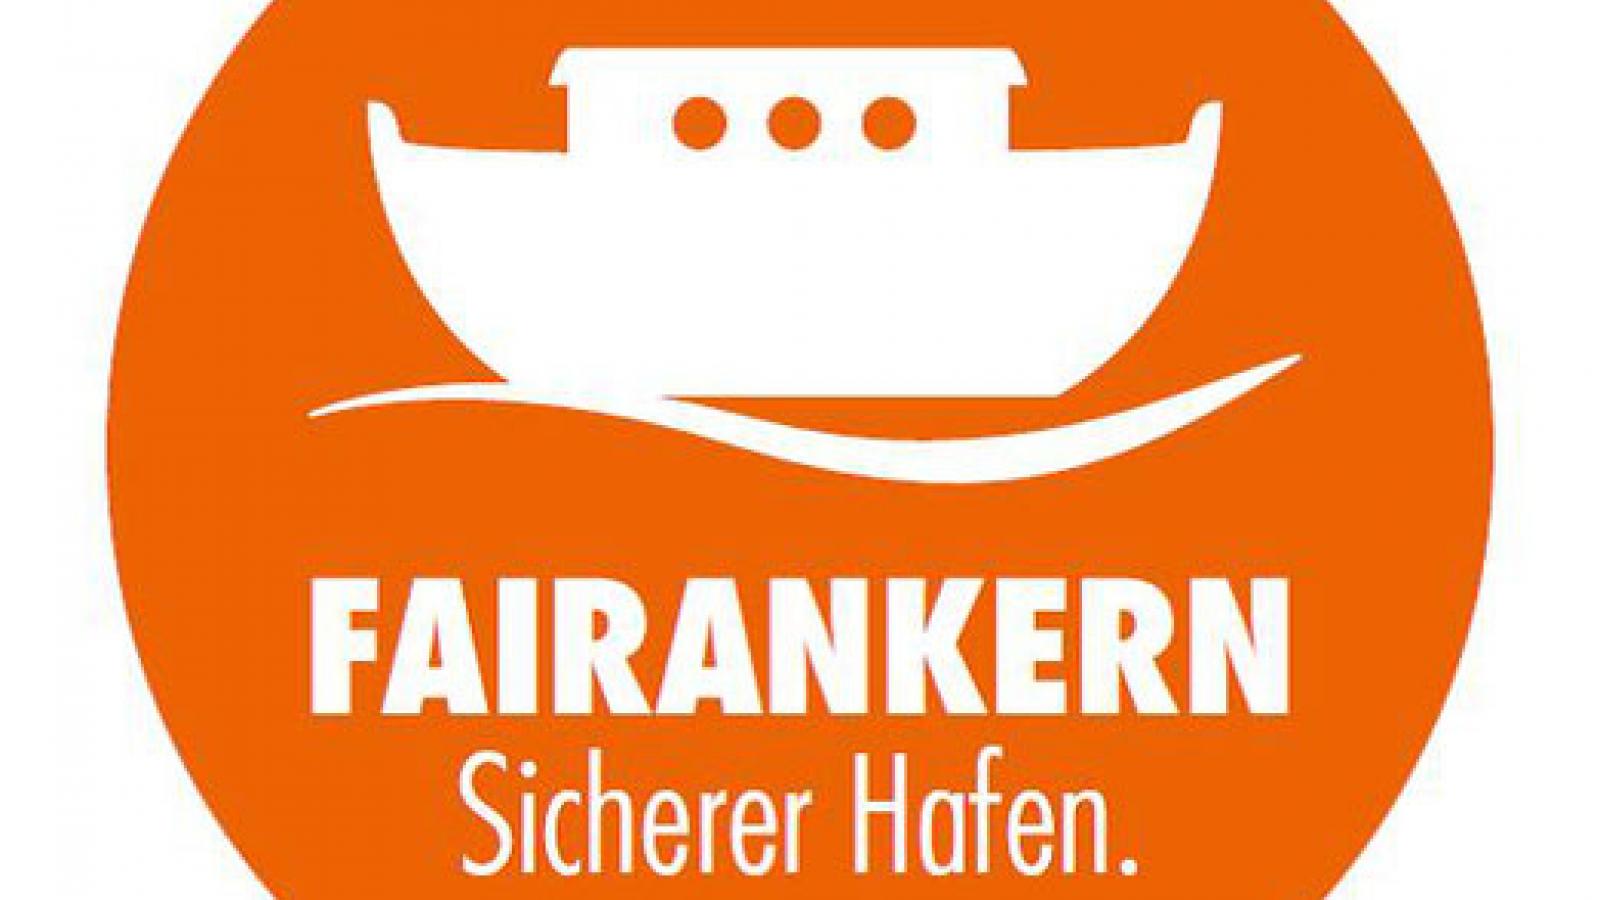 Fairankern